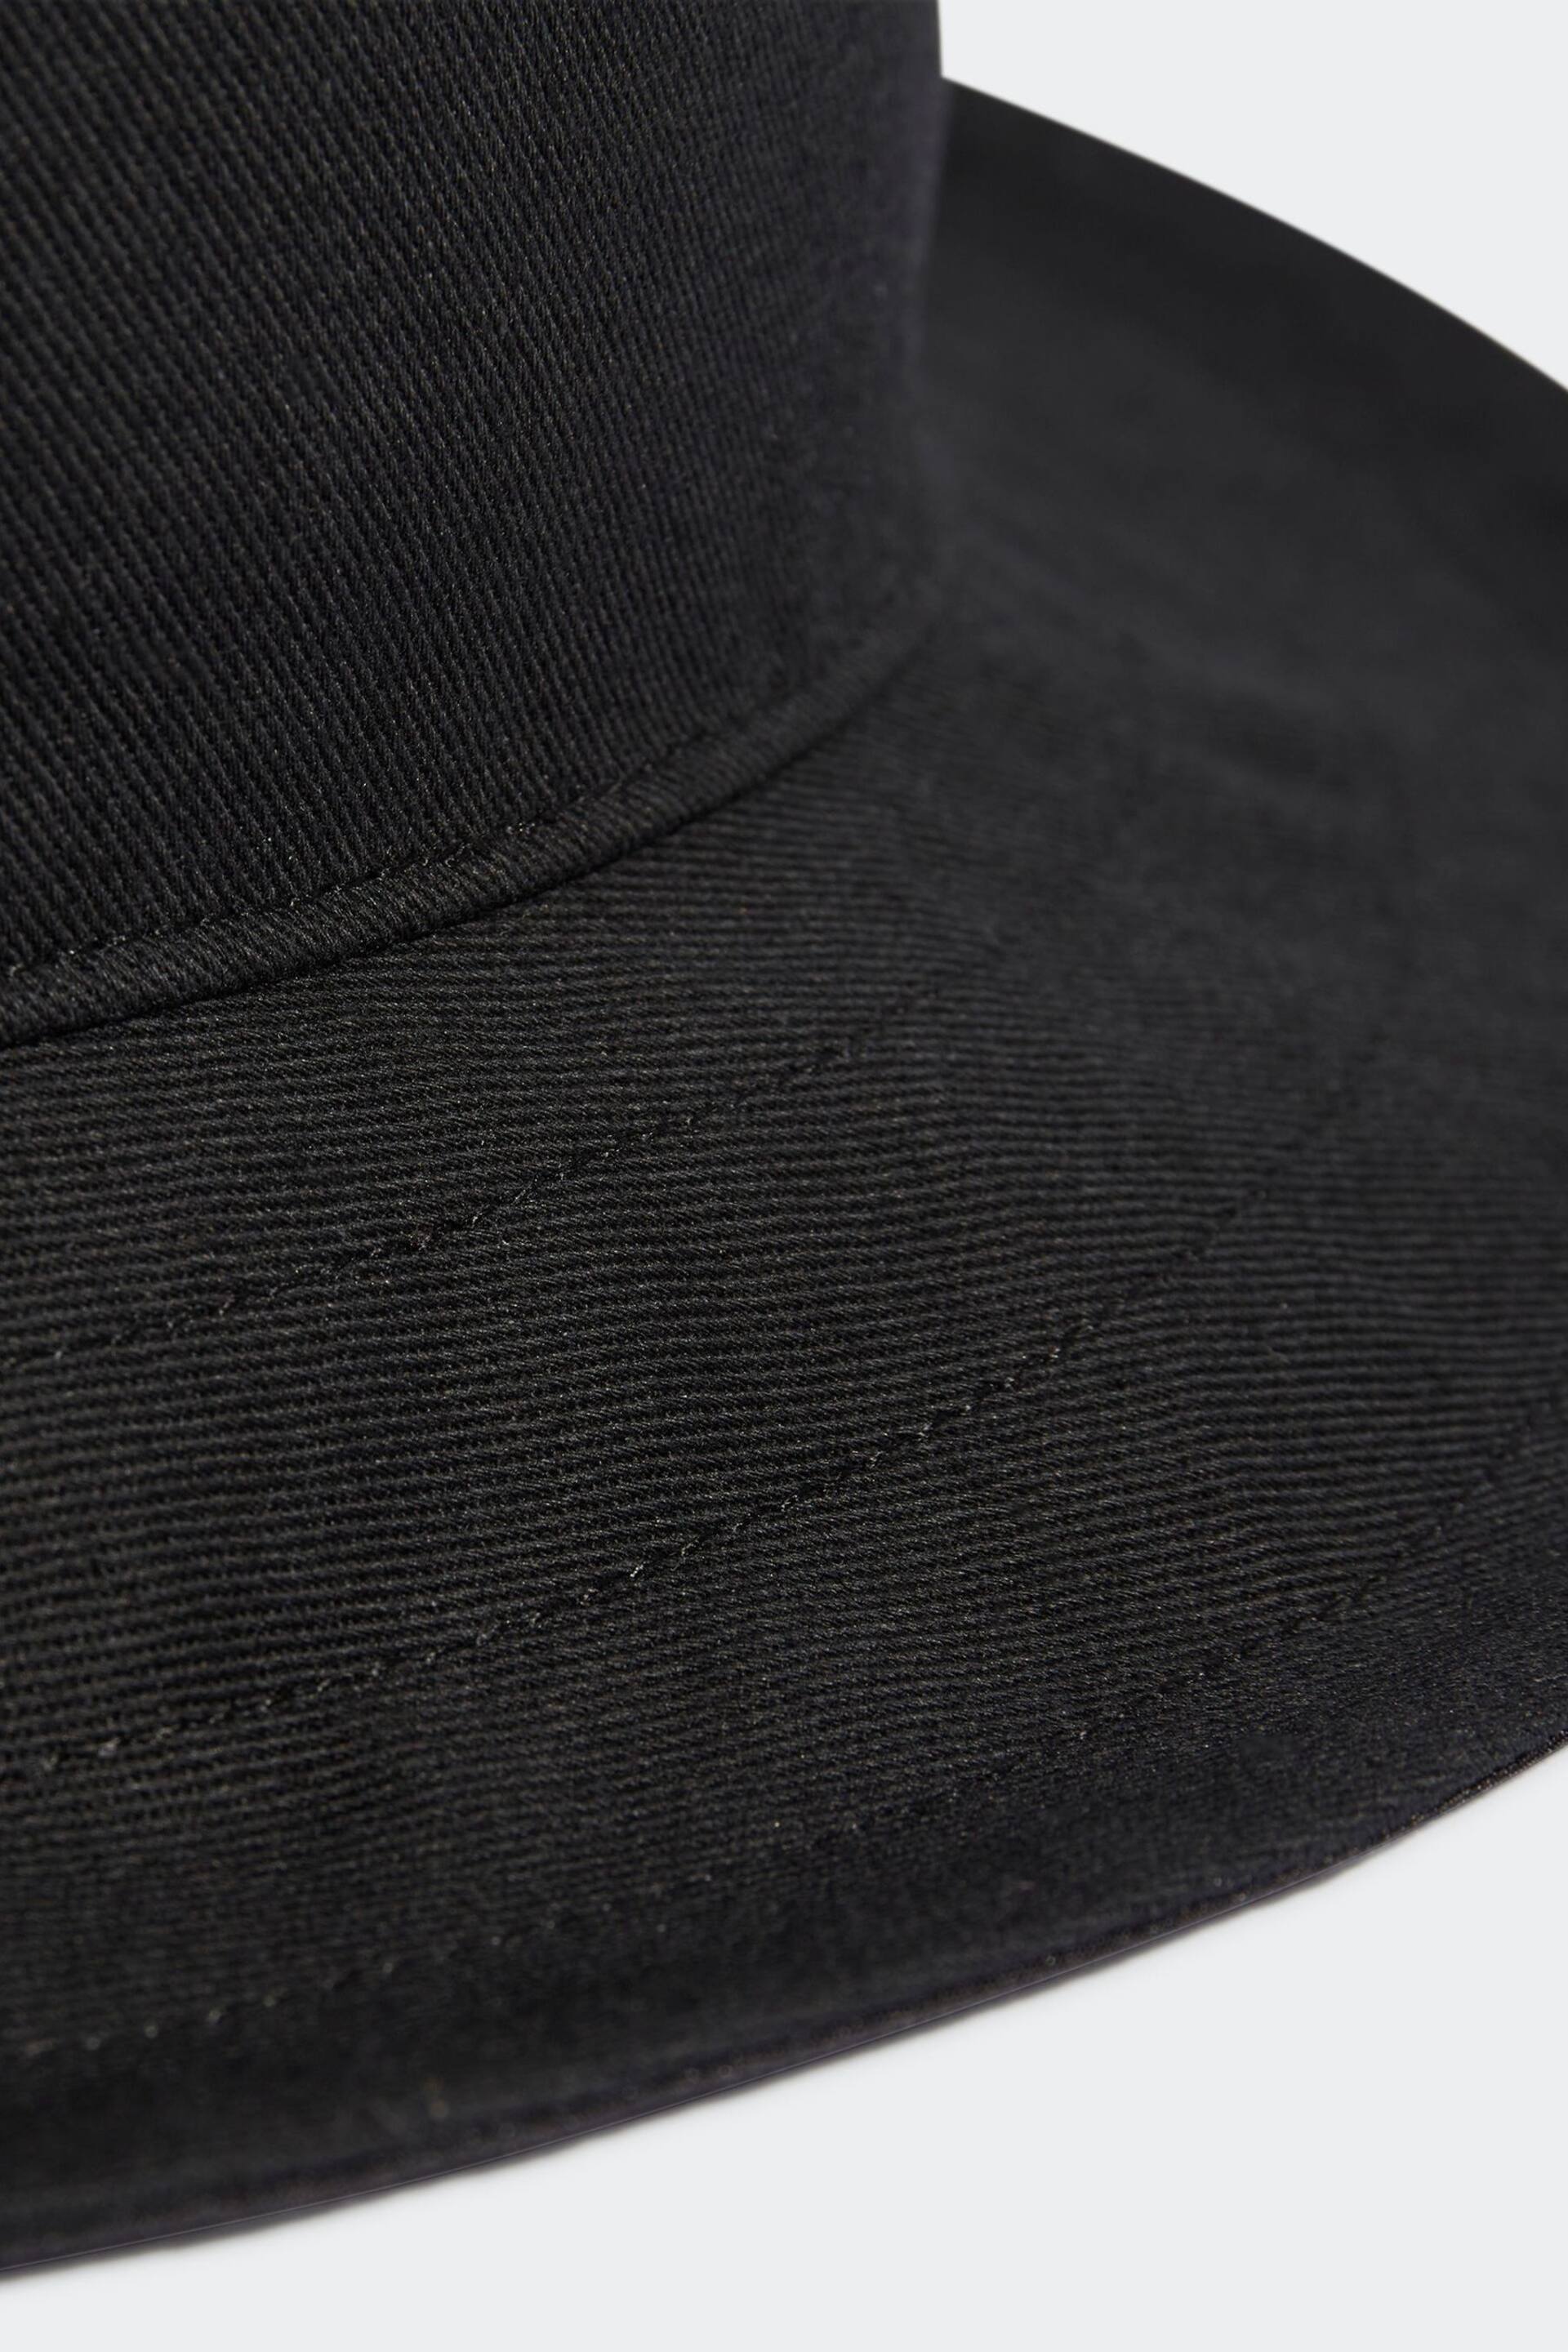 adidas Black Junior Dance Bucket Hat - Image 3 of 4